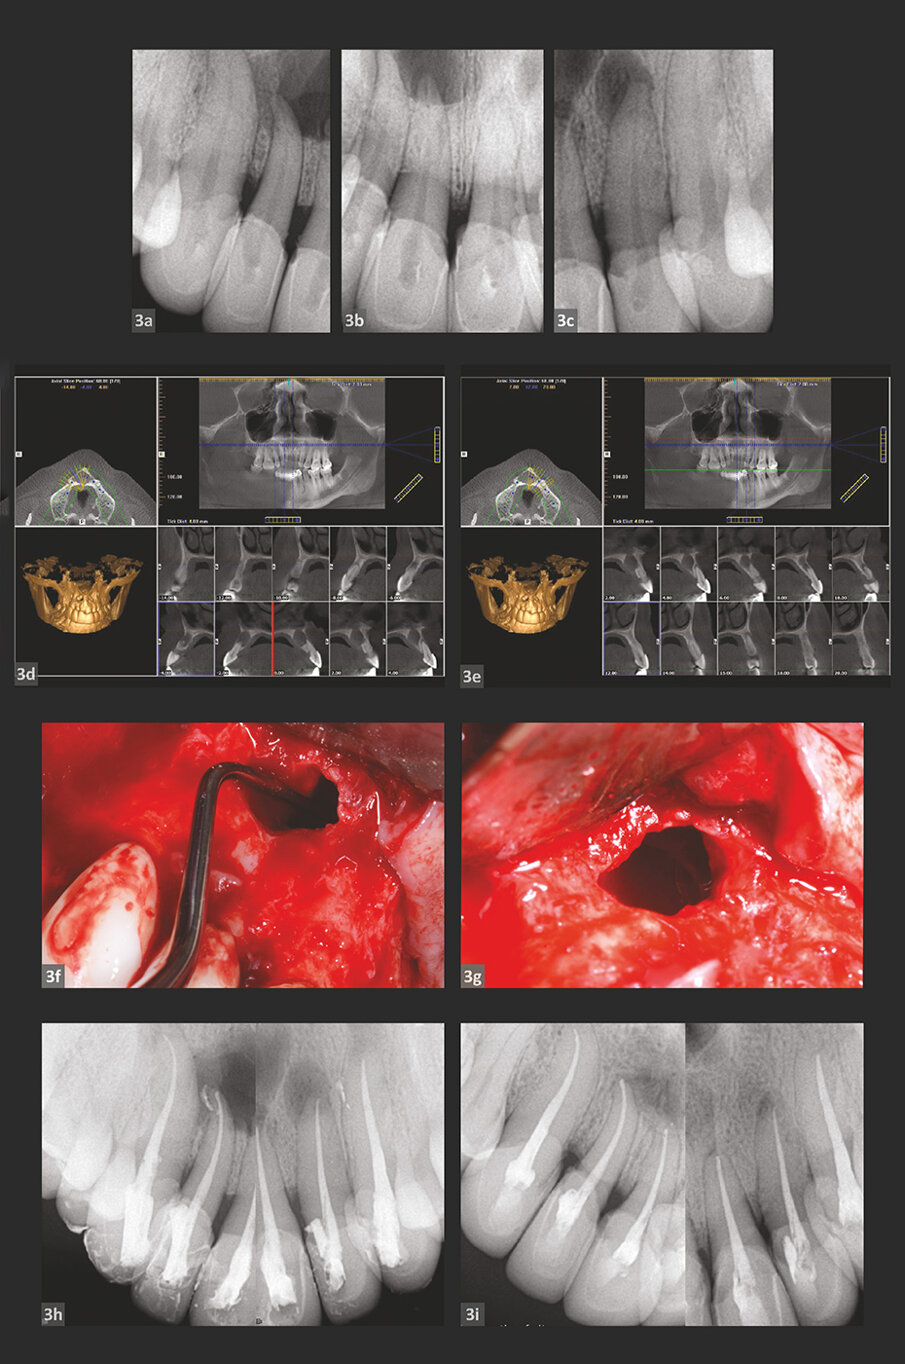 SLUČAJ 3
Slike 3a–3c: Preoperativni rendgenski snimci: gornji prednji zubi.
Slike 3d i 3e: CBCT skeniranje.
Slike 3f i 3g: Intraoperativne fotografije koje pokazuju nedostatke kosti kao rezultat cističnih reakcija.
Slike 3h–3j: Postoperativne radiografije neposredno nakon intervencije.
Slike 3k i 3l: Radiografije nakon18-mesečnog praćenja.
